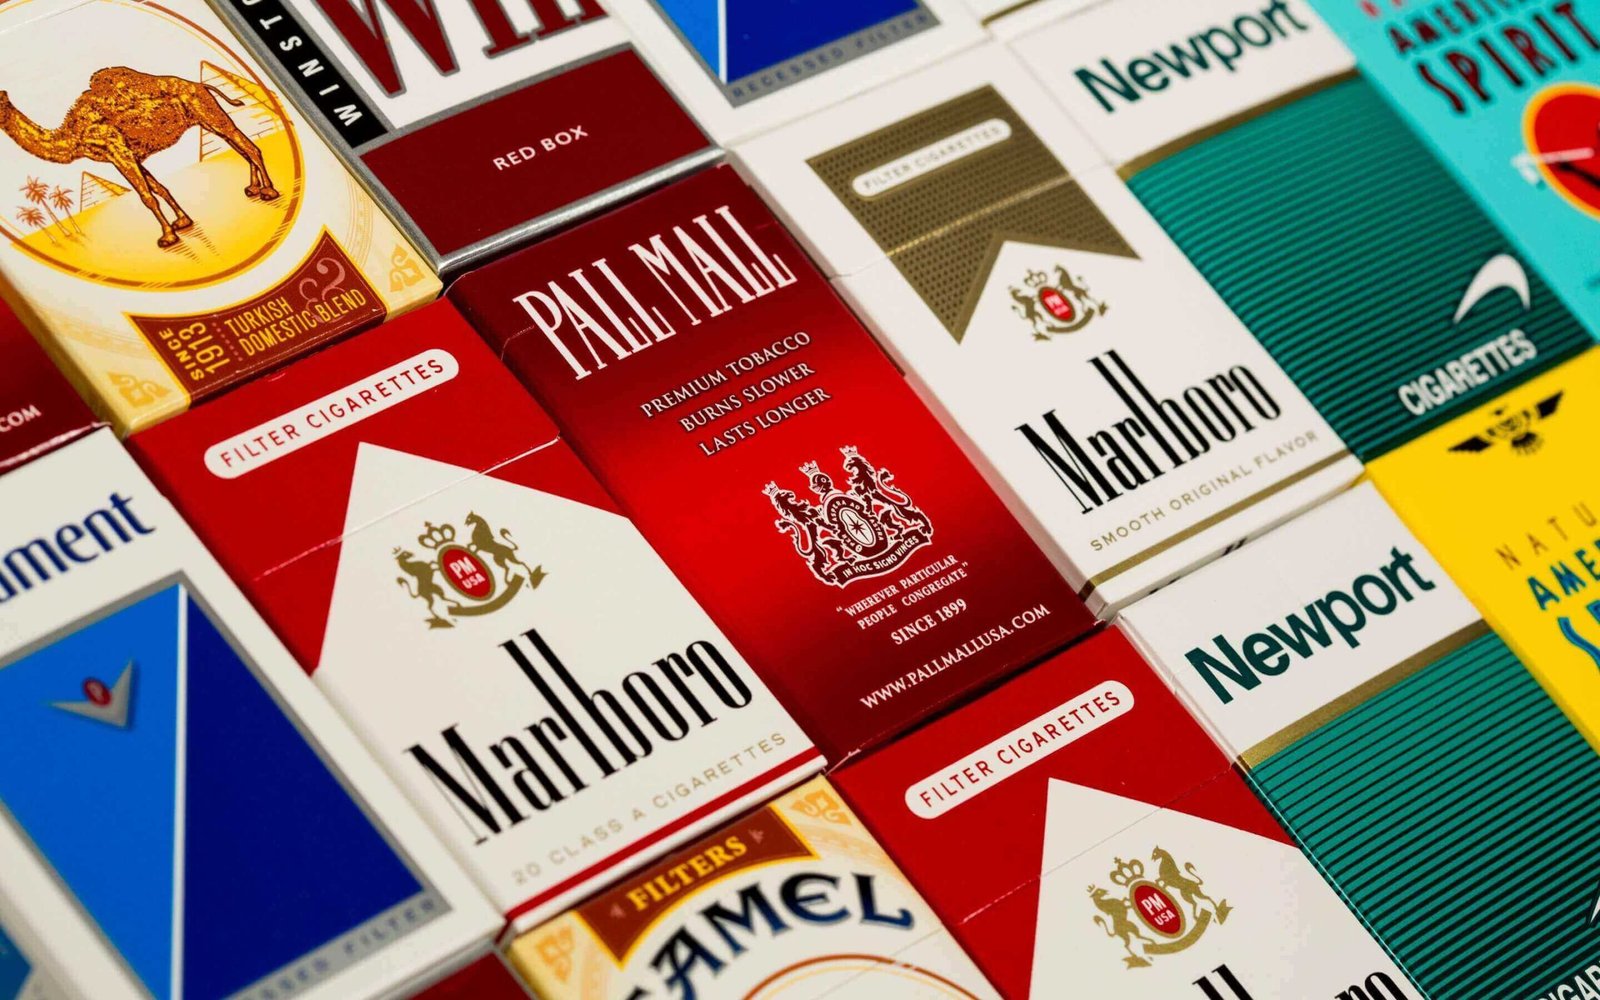 Discover the most popular cigarette brands in the UK, like Marlboro, Benson & Hedges, Lambert & Butler, Richmond, Silk Cut, Mayfair, Sterling.